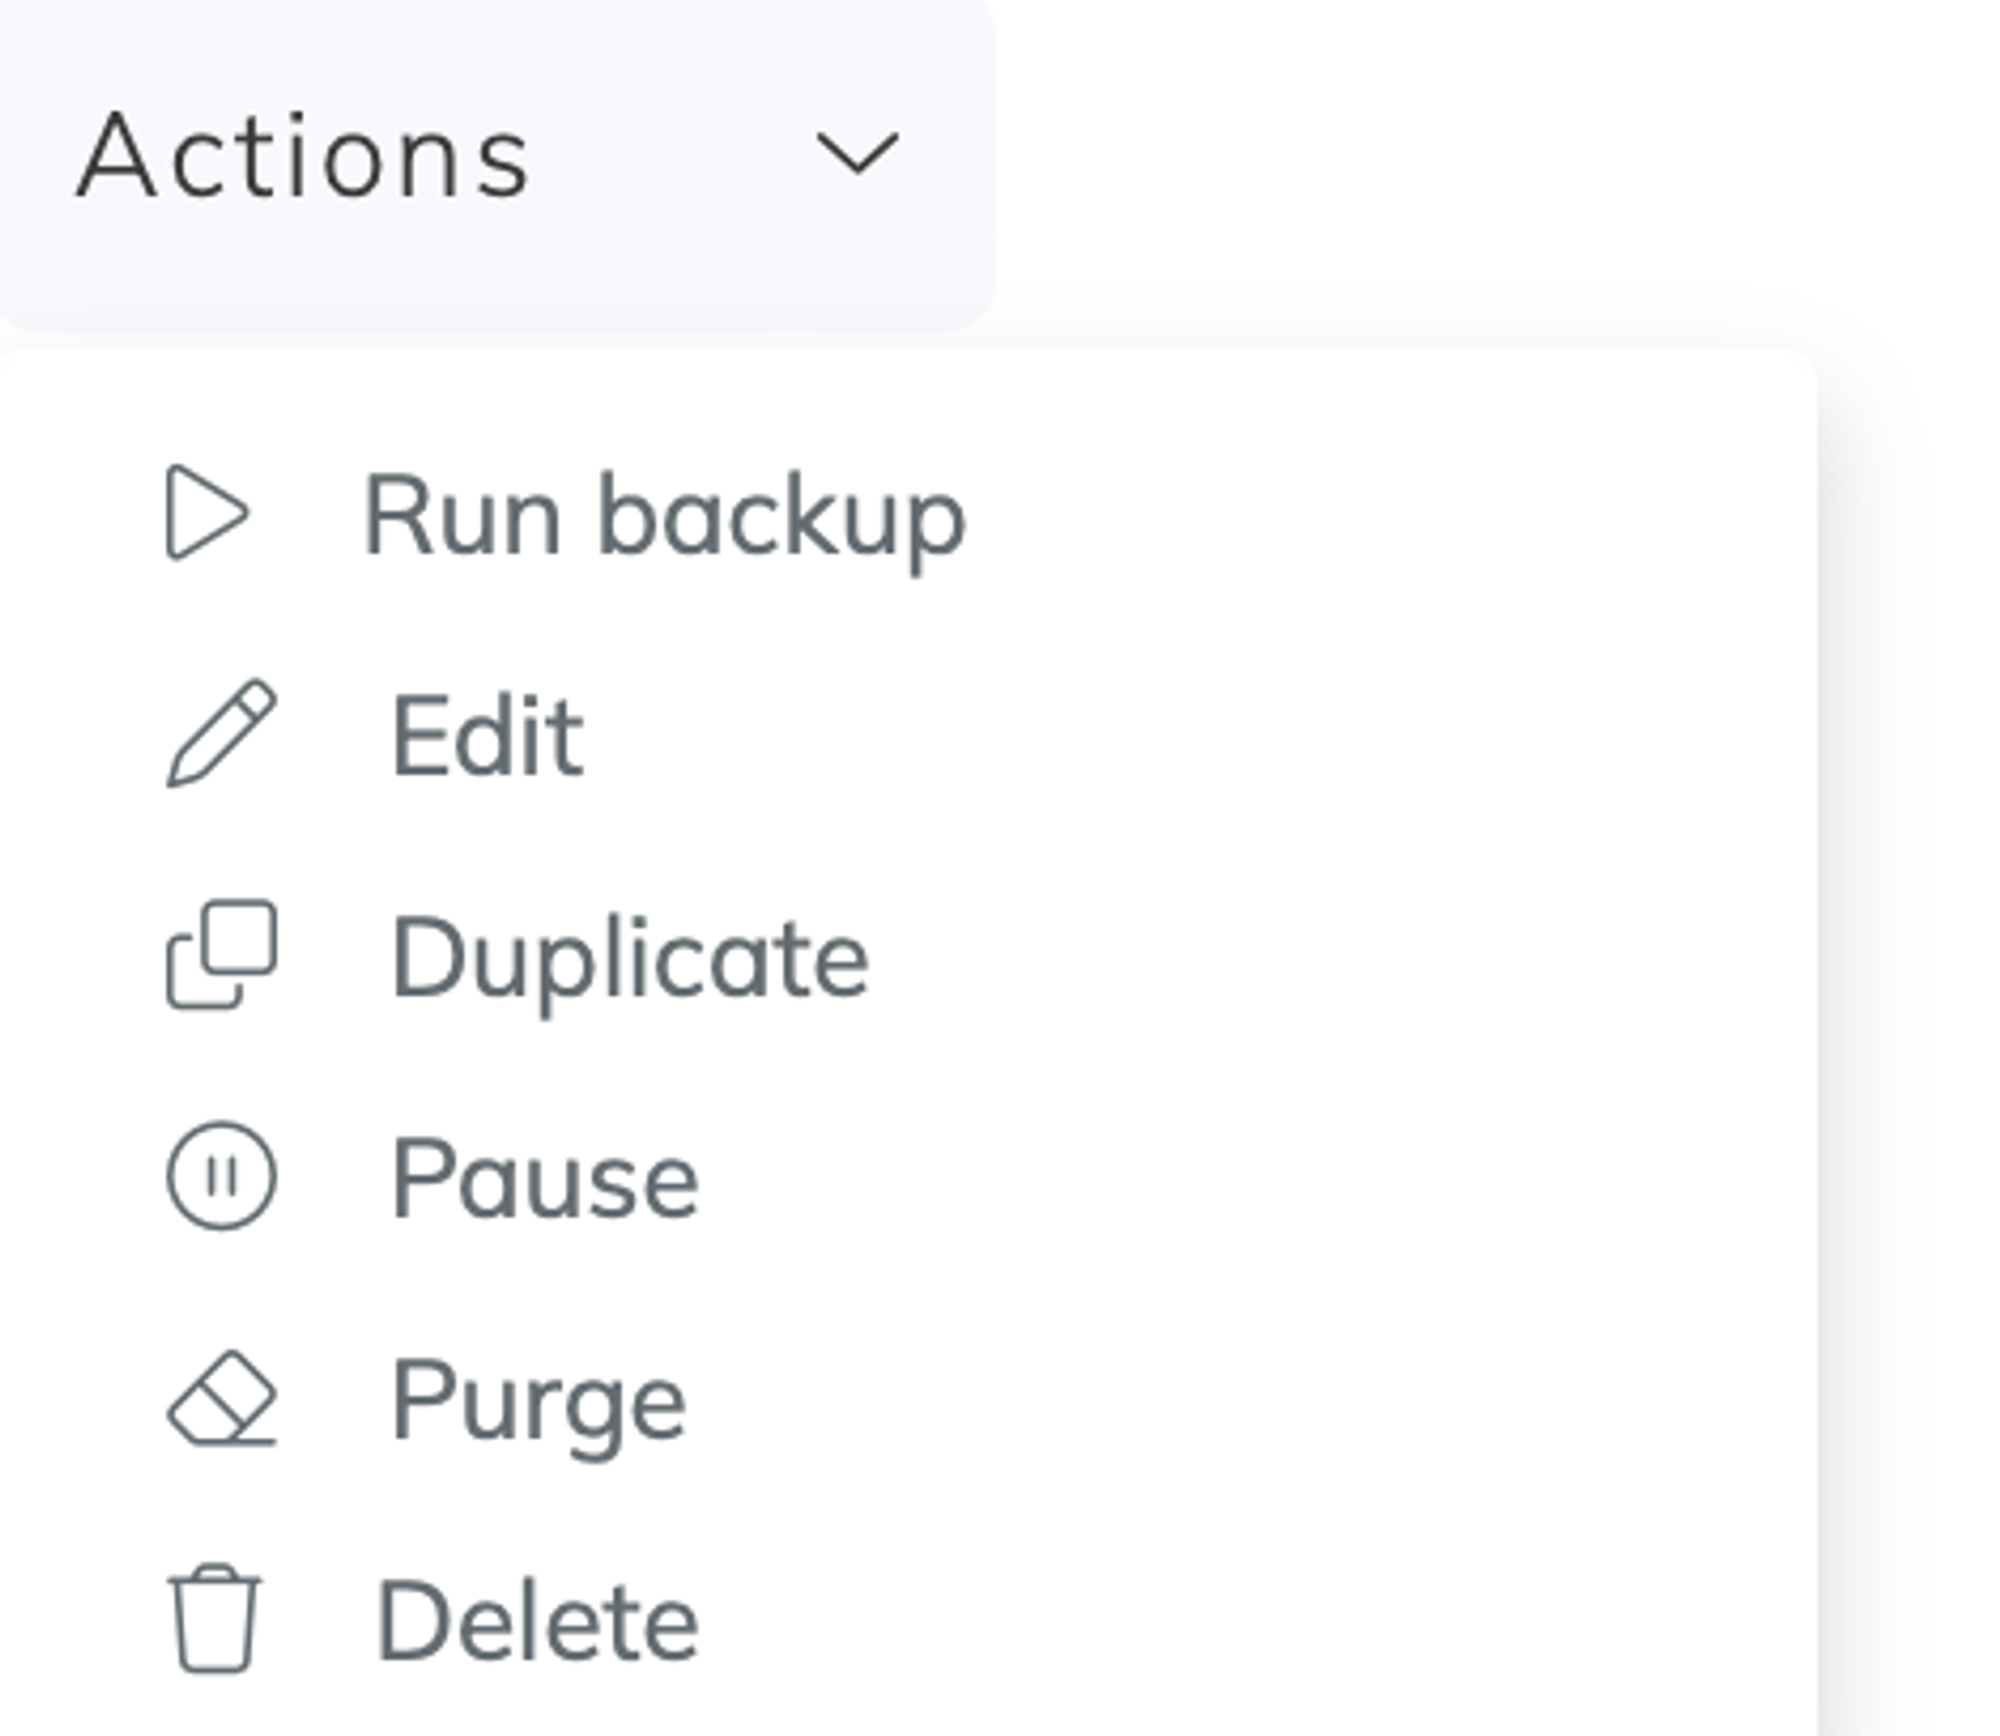 Duplicate backup to edit the storage